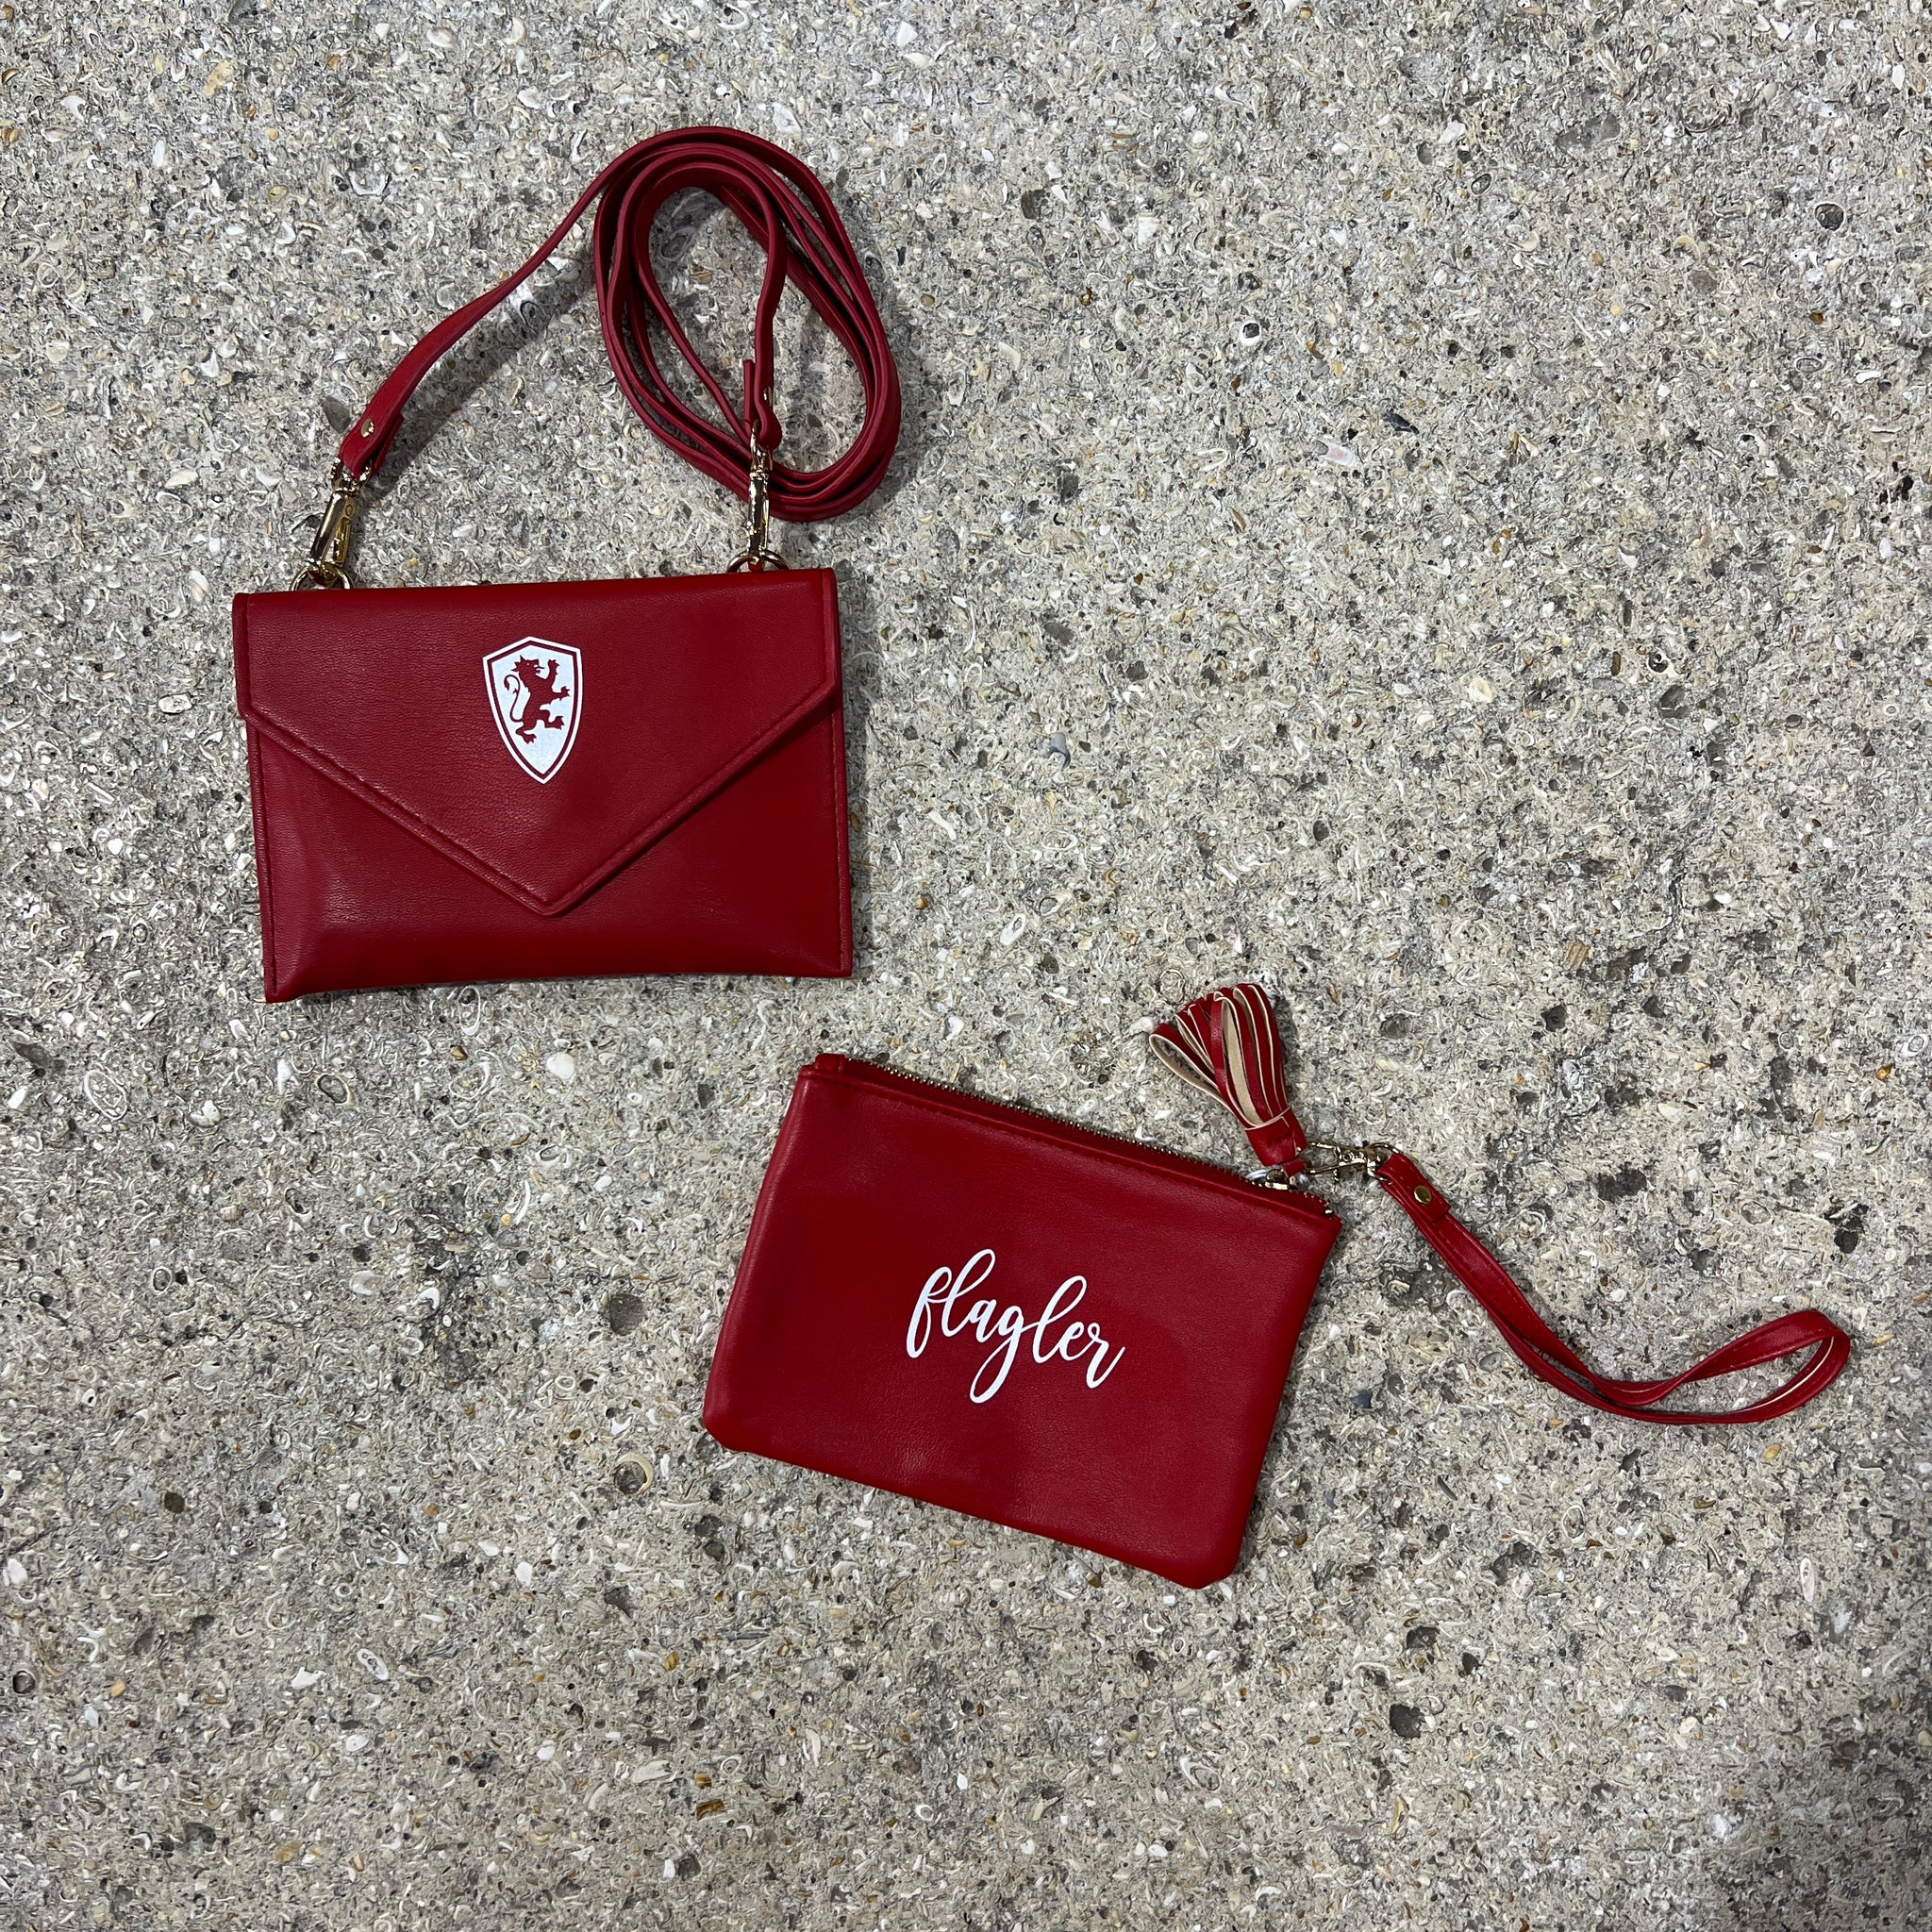 Crimson wristlet bag with white cursive imprint saying Flagler